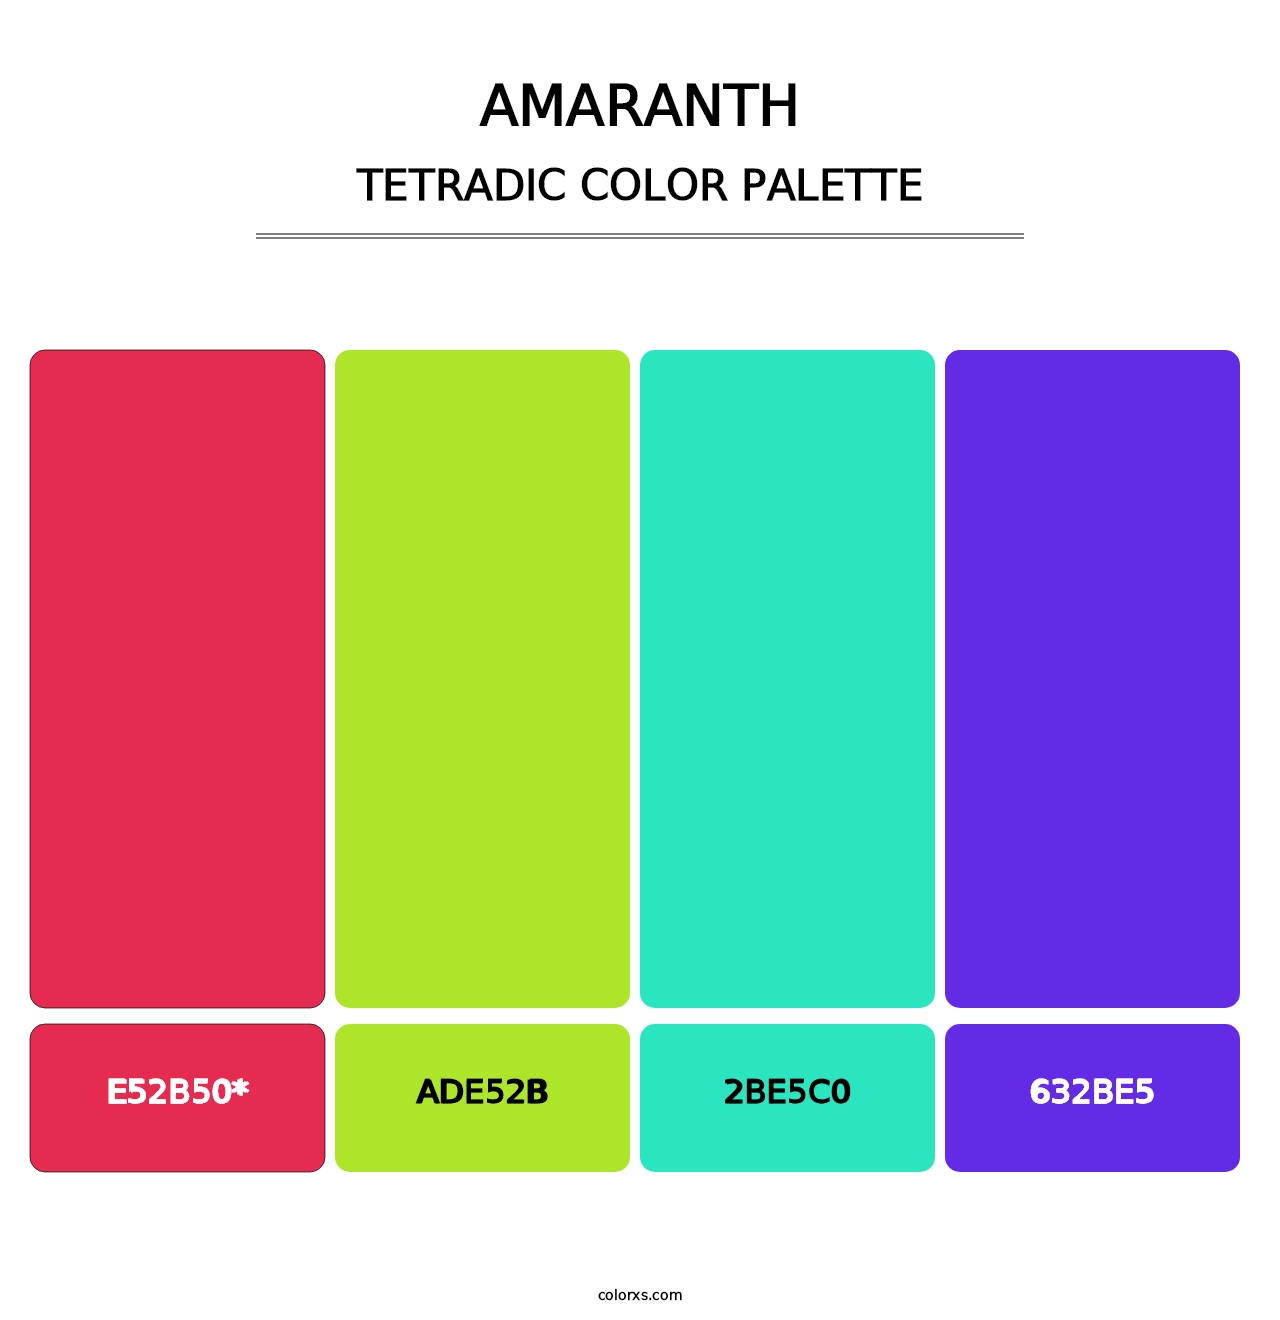 Amaranth - Tetradic Color Palette